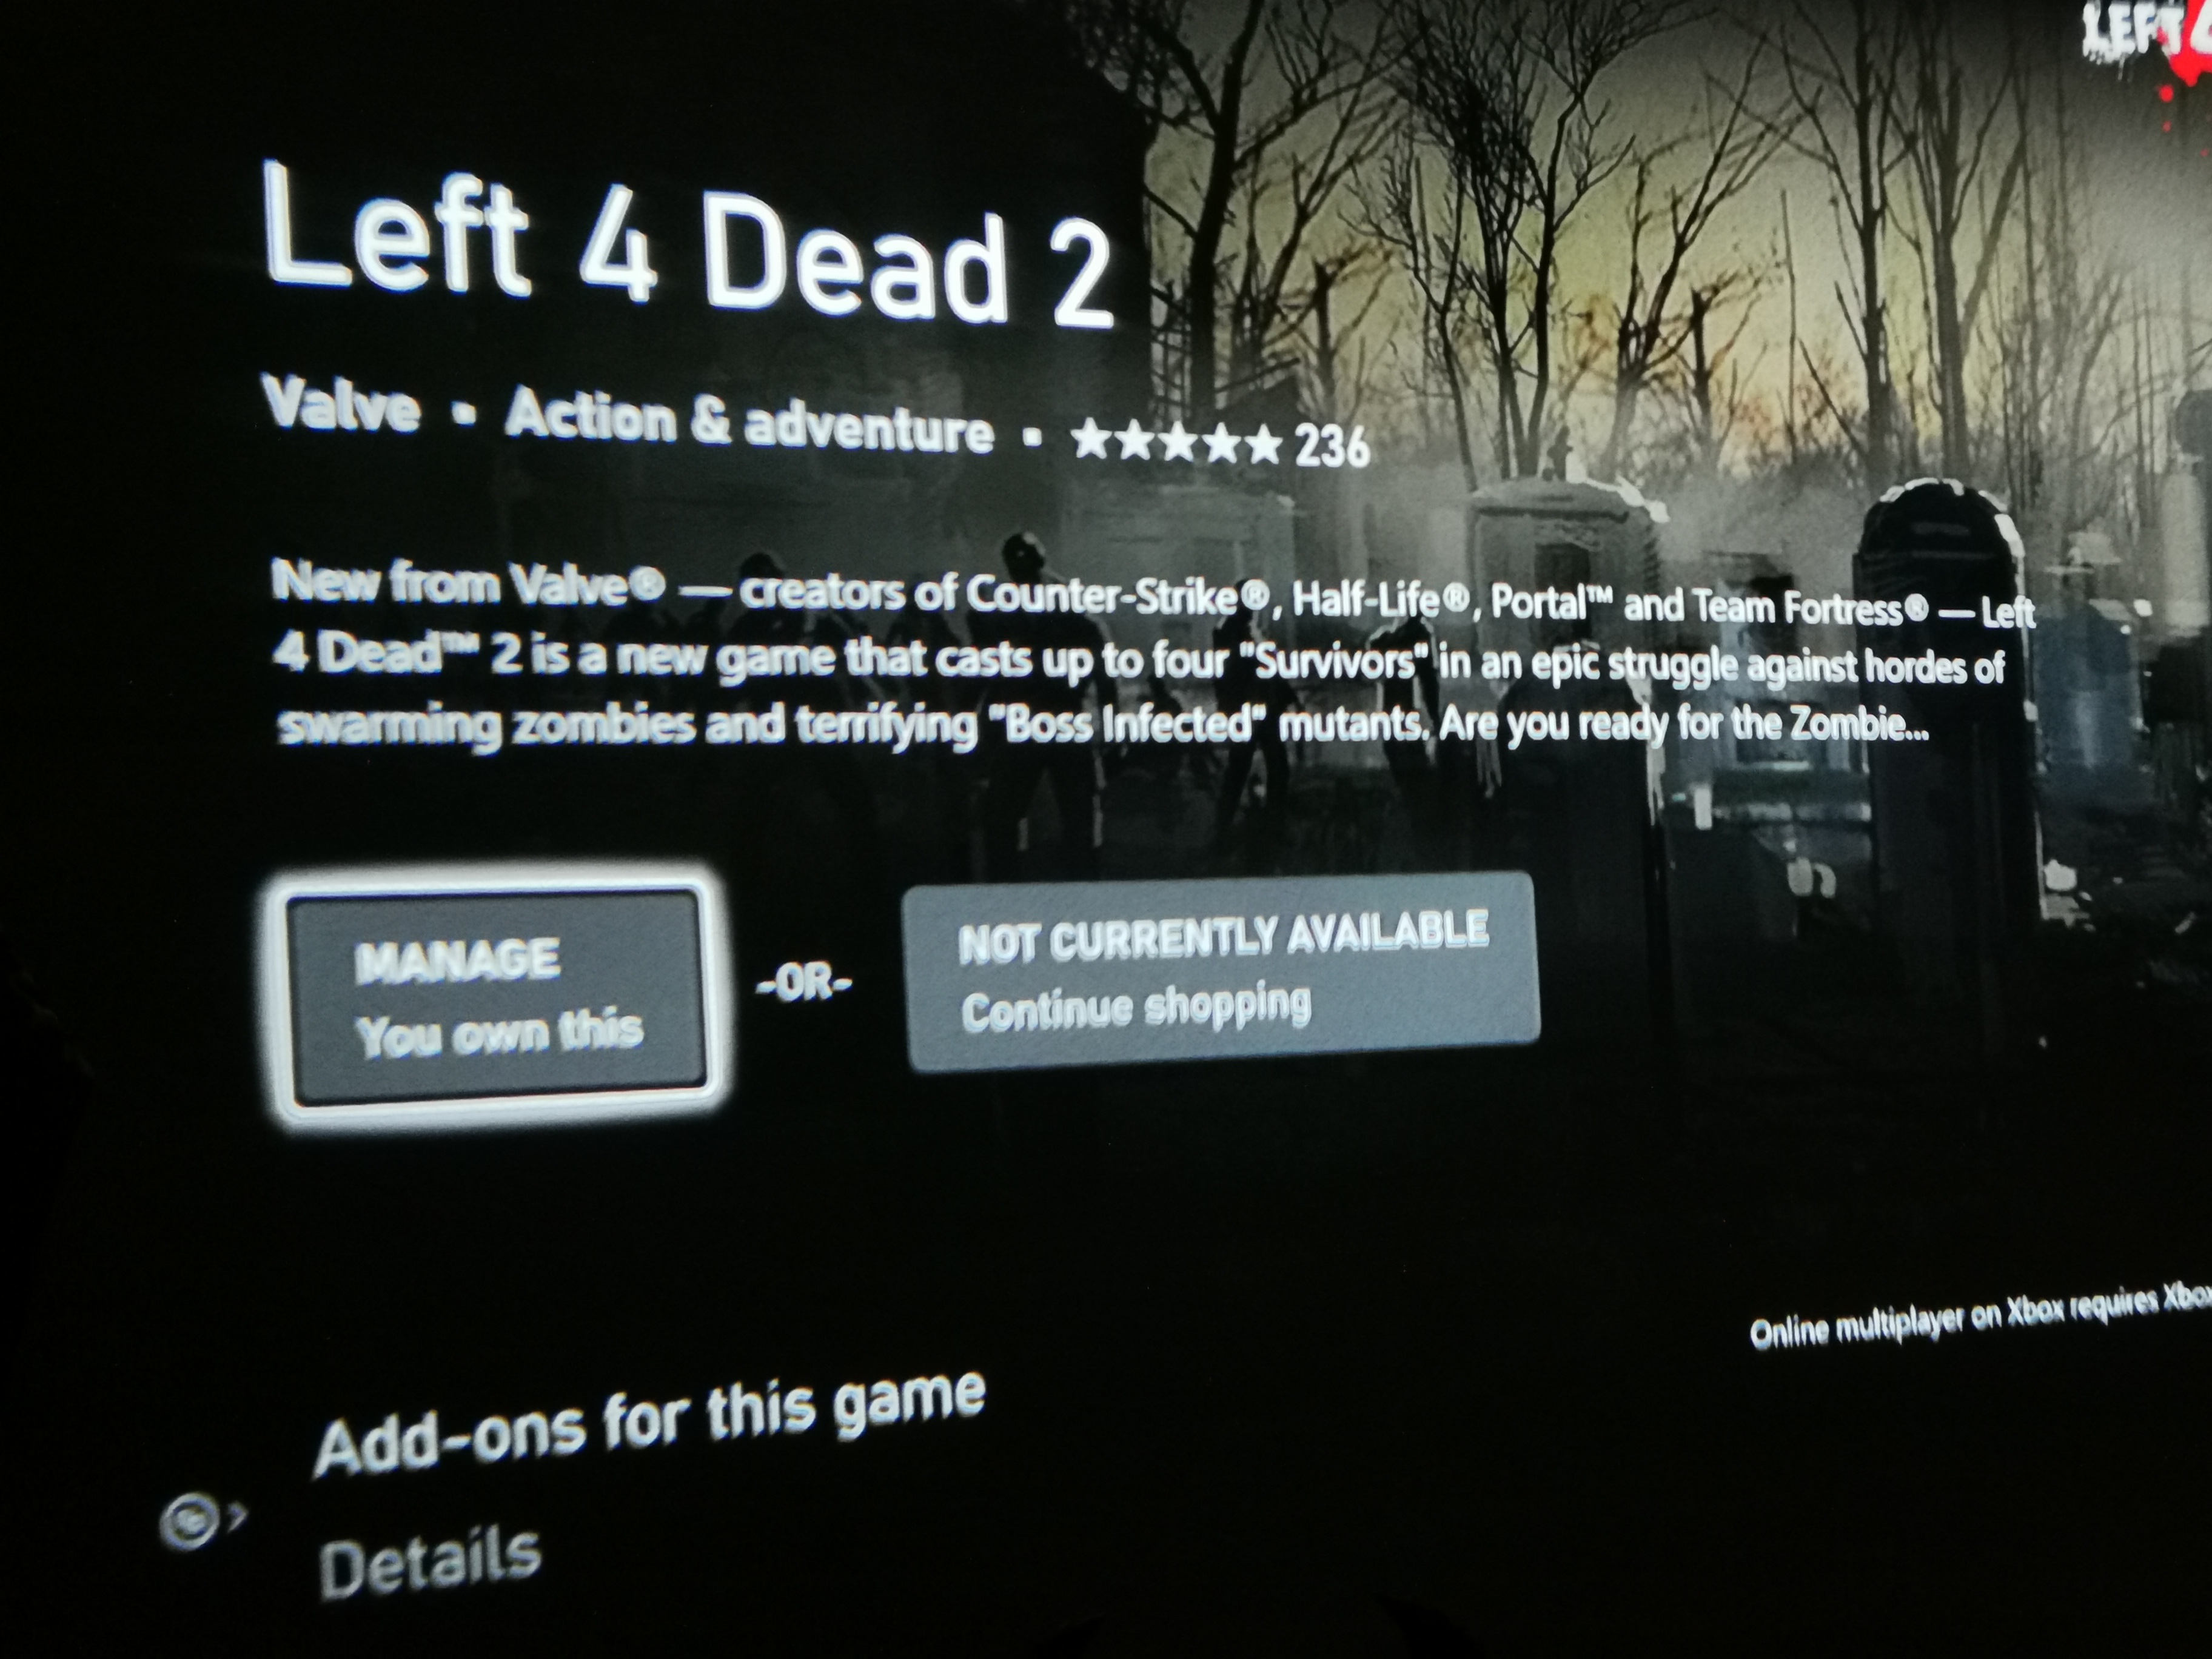 Left dead 2 digital won't launch on Xbox one - Microsoft Community